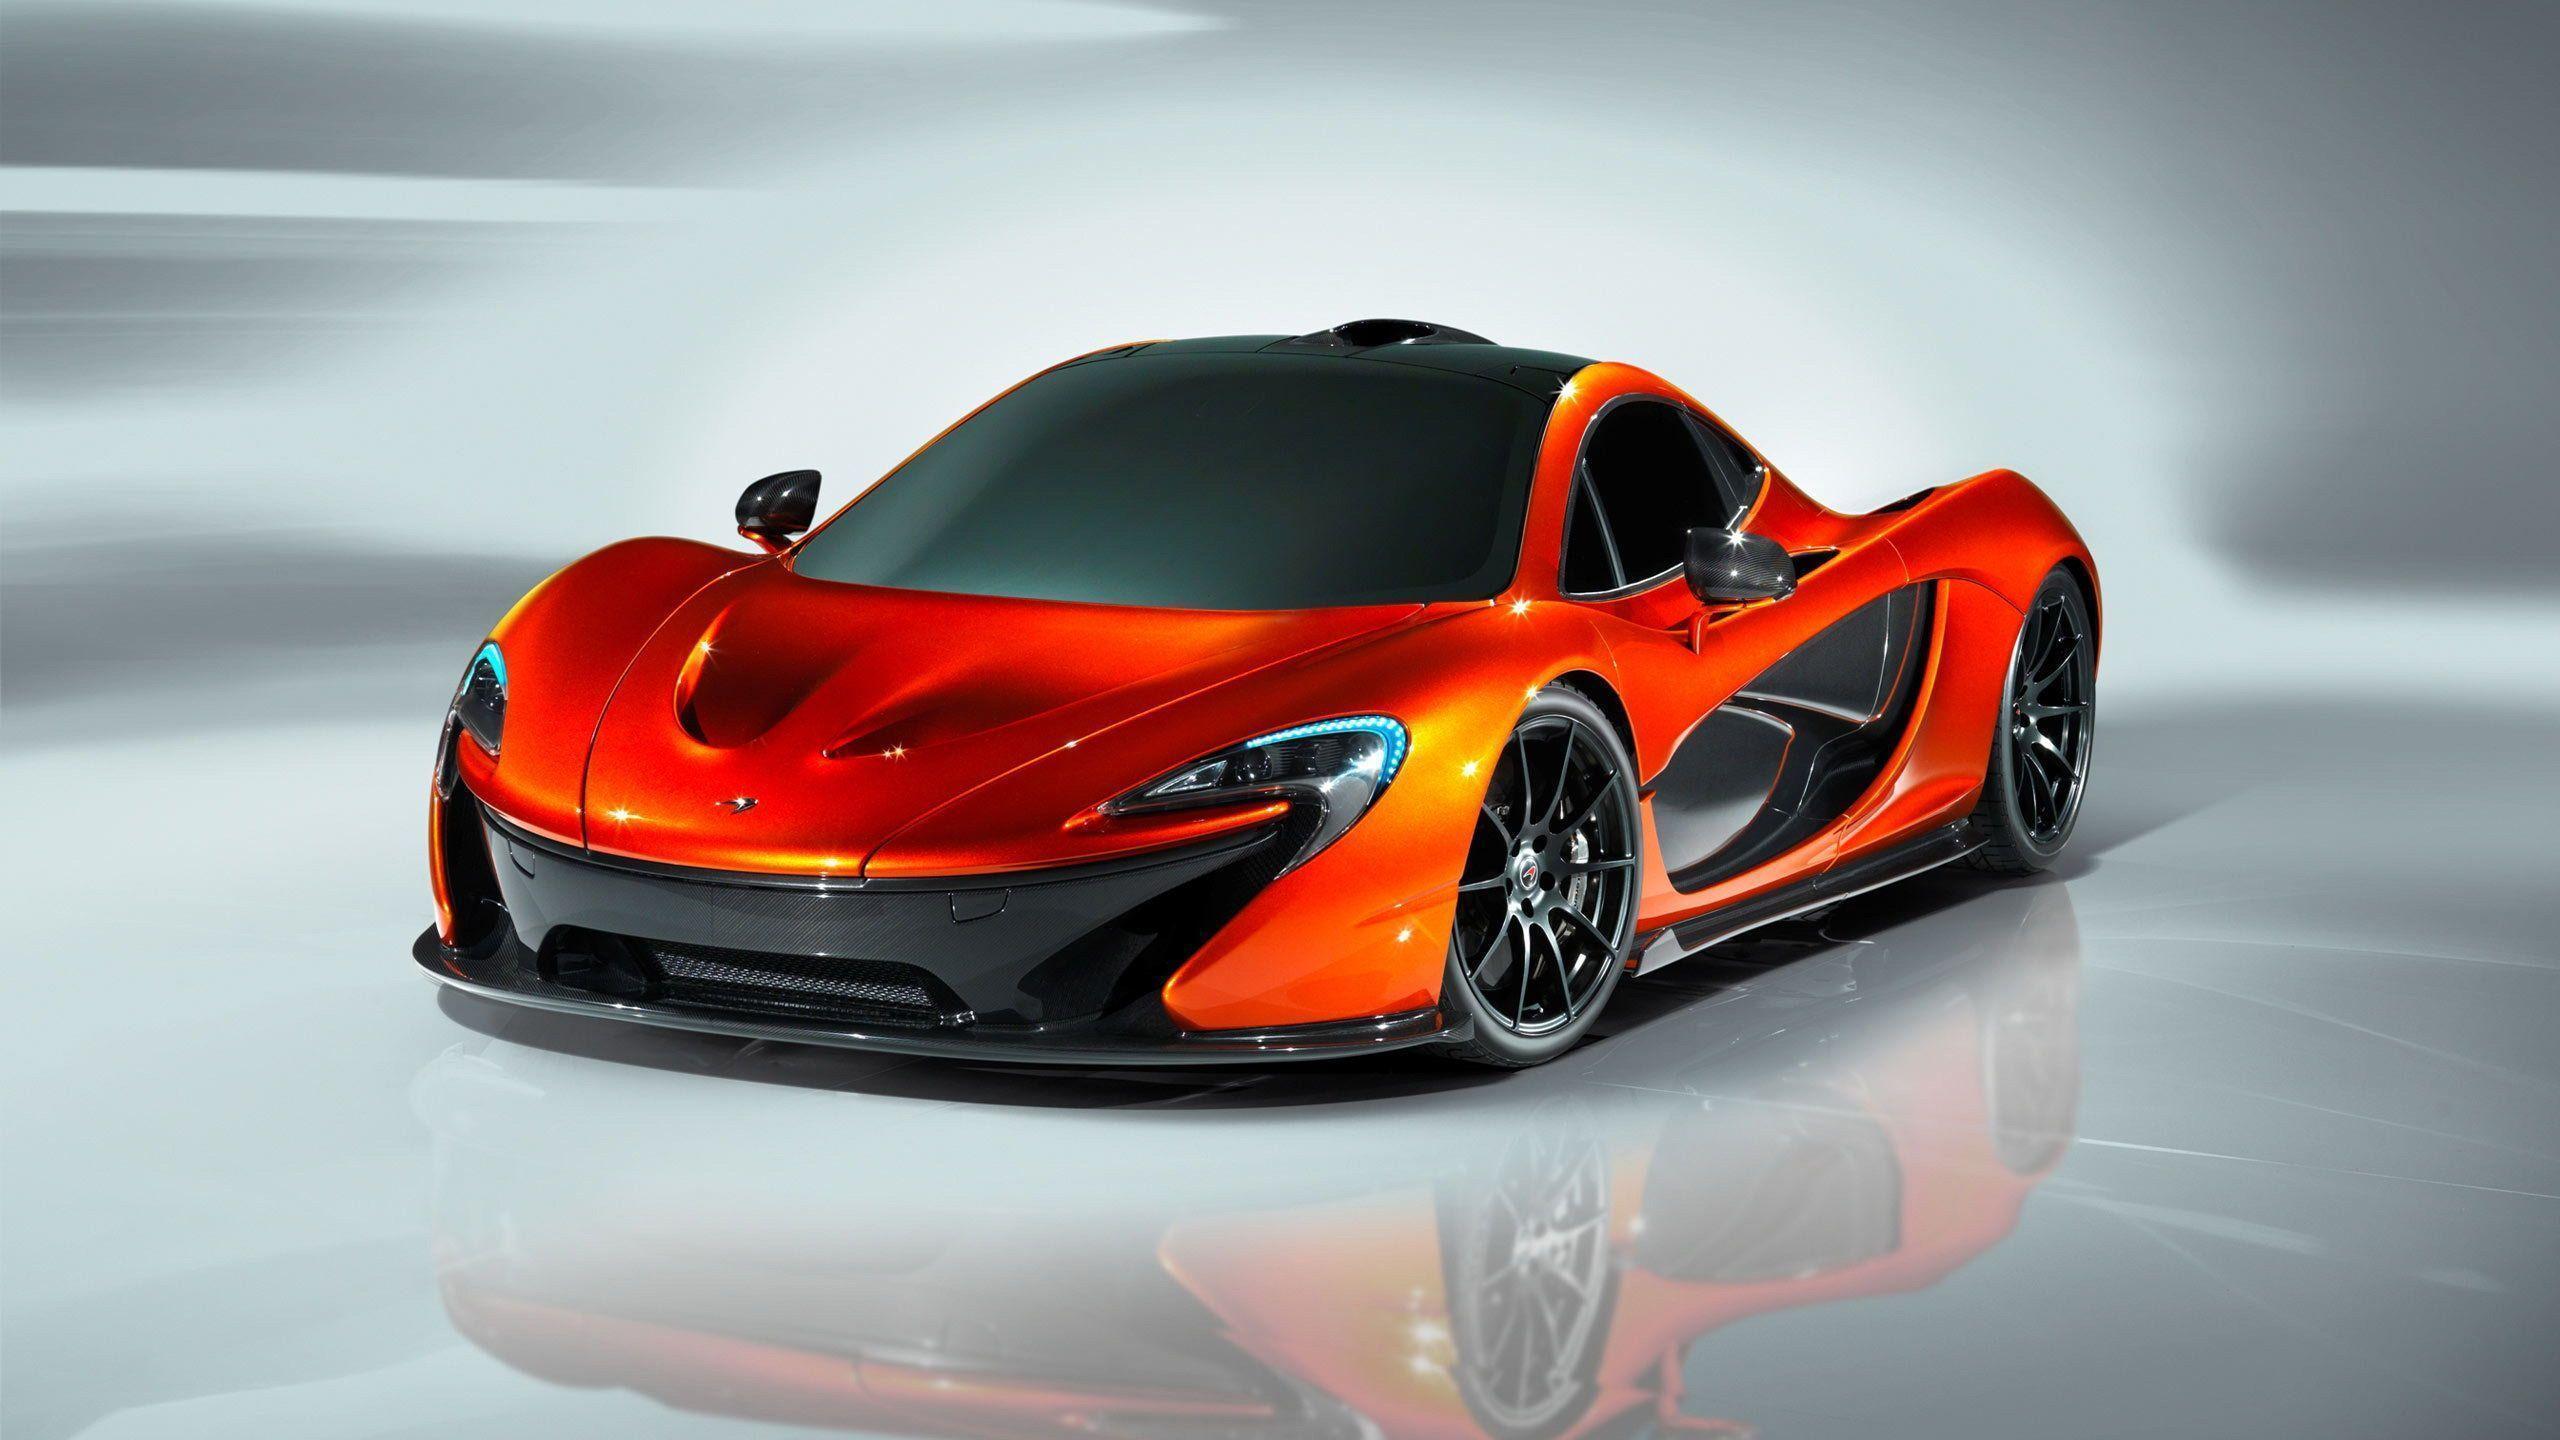 Cool 2014 McLaren P1 Concept Sports Car Wallpaper 2560 1440